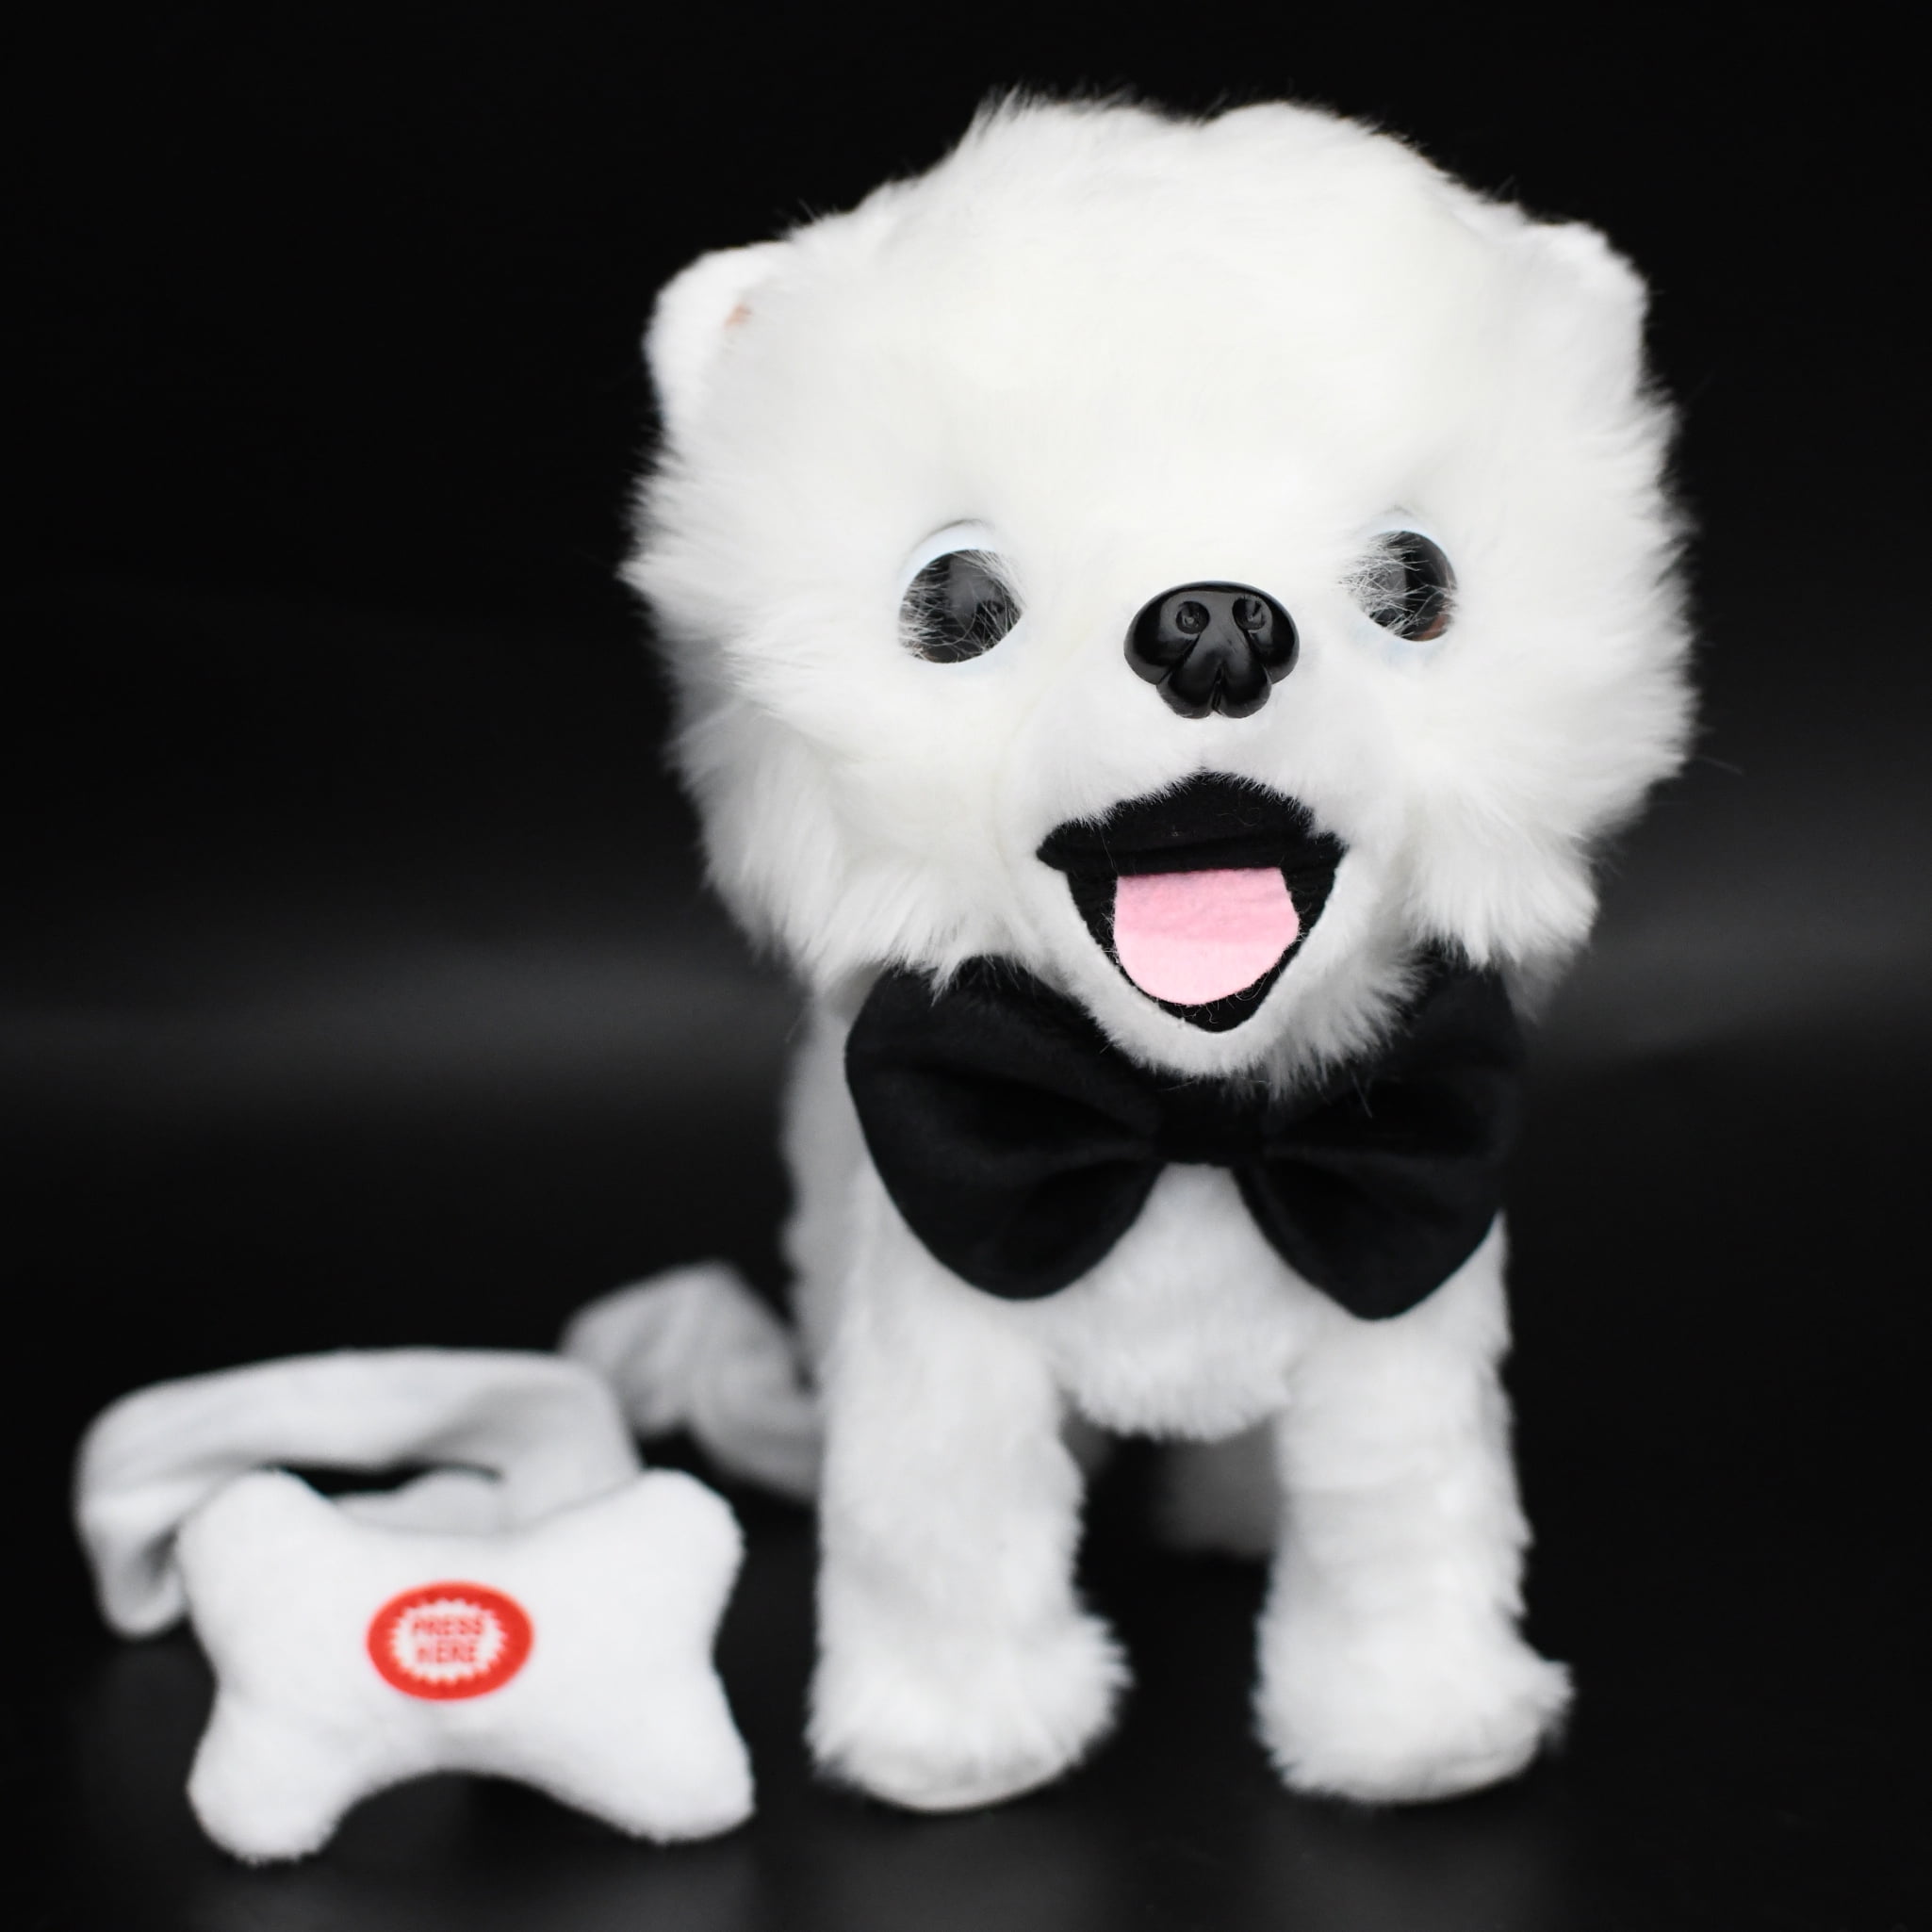 DOG PUPPY Plush Animal Robot Walks Barks Game CHRISTMAS GIFT Toy New 